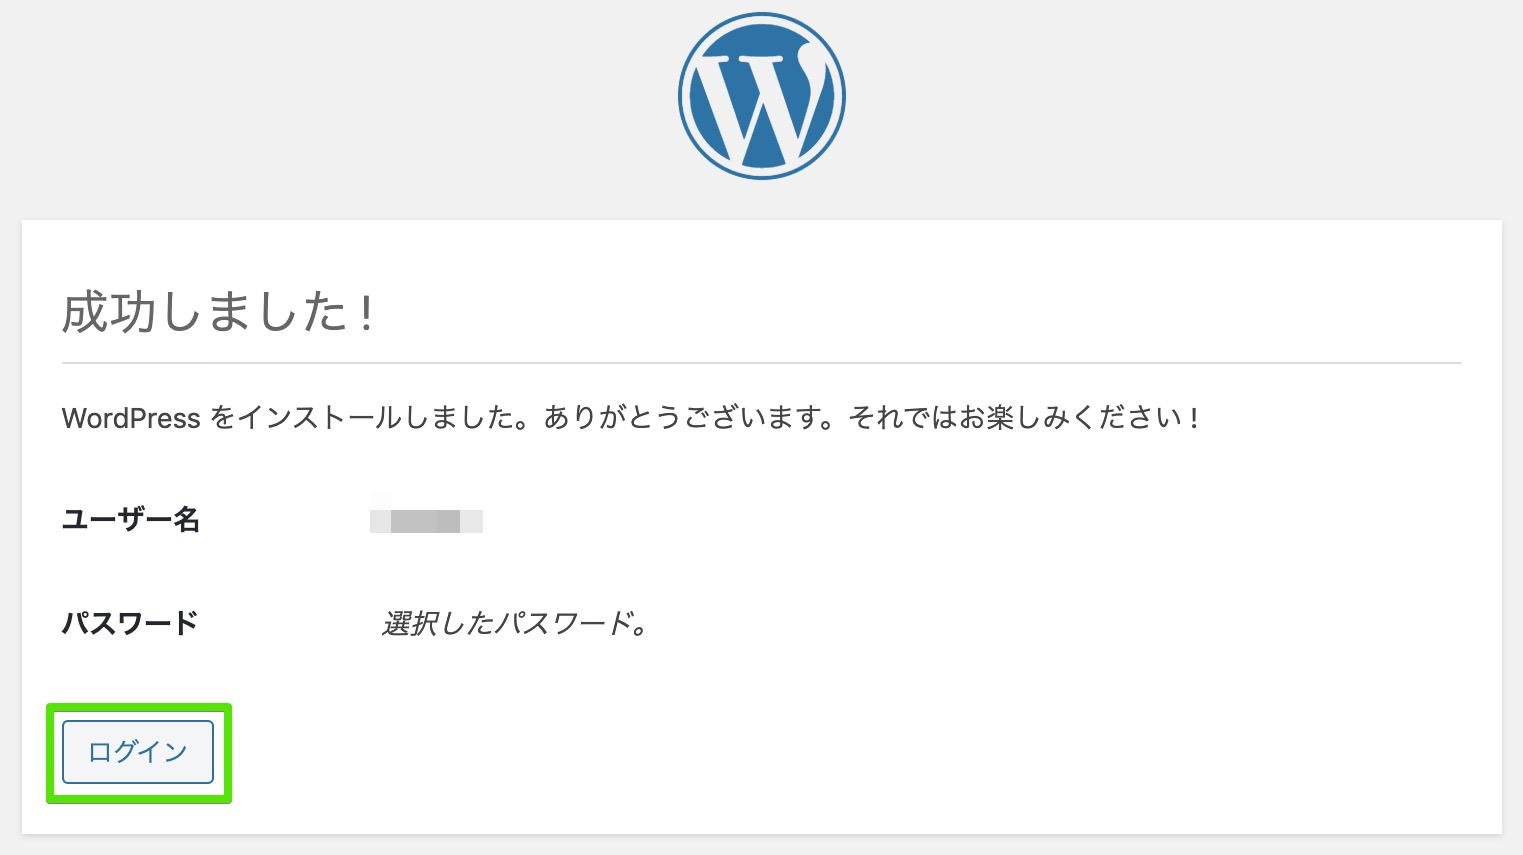 WordPressのインストールが完了